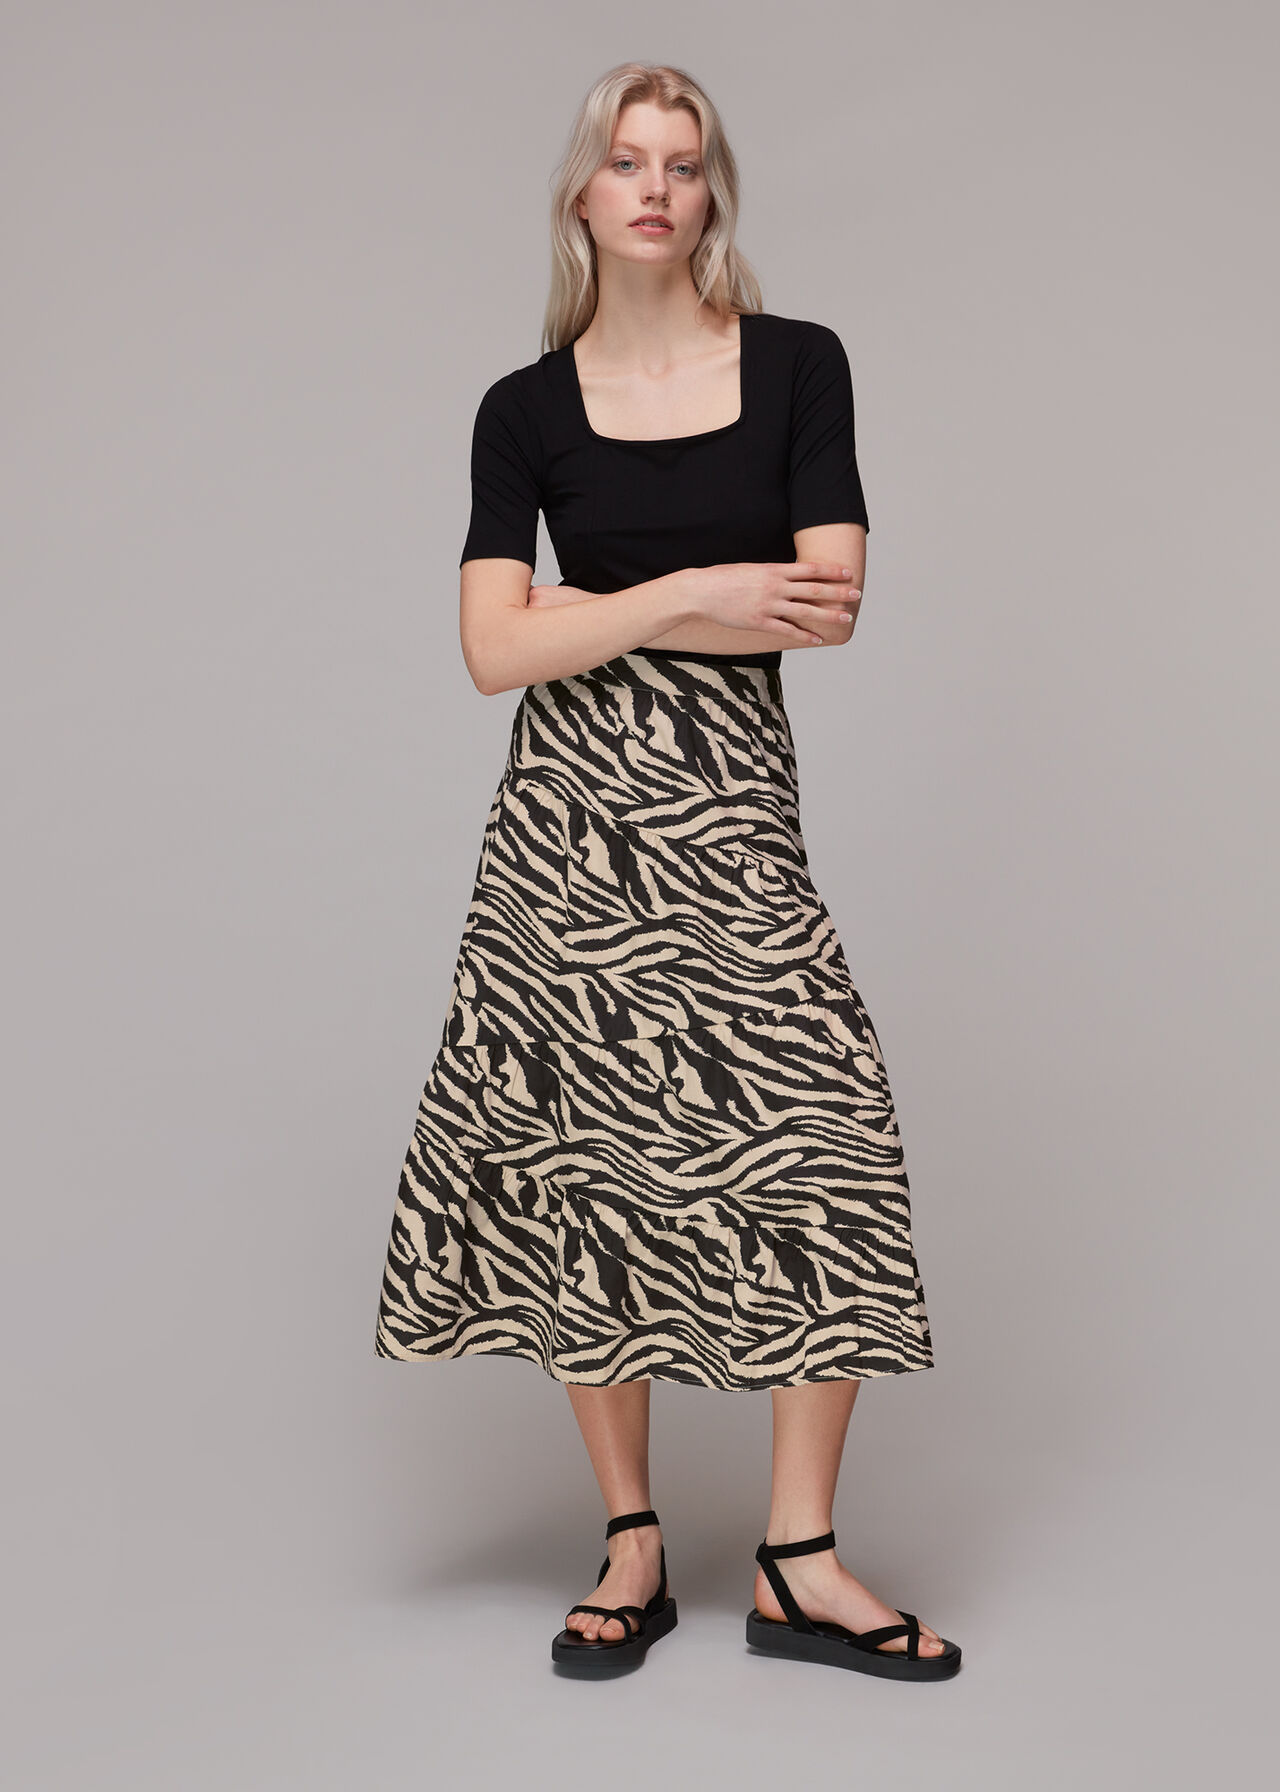 Mountain Zebra Tiered Skirt